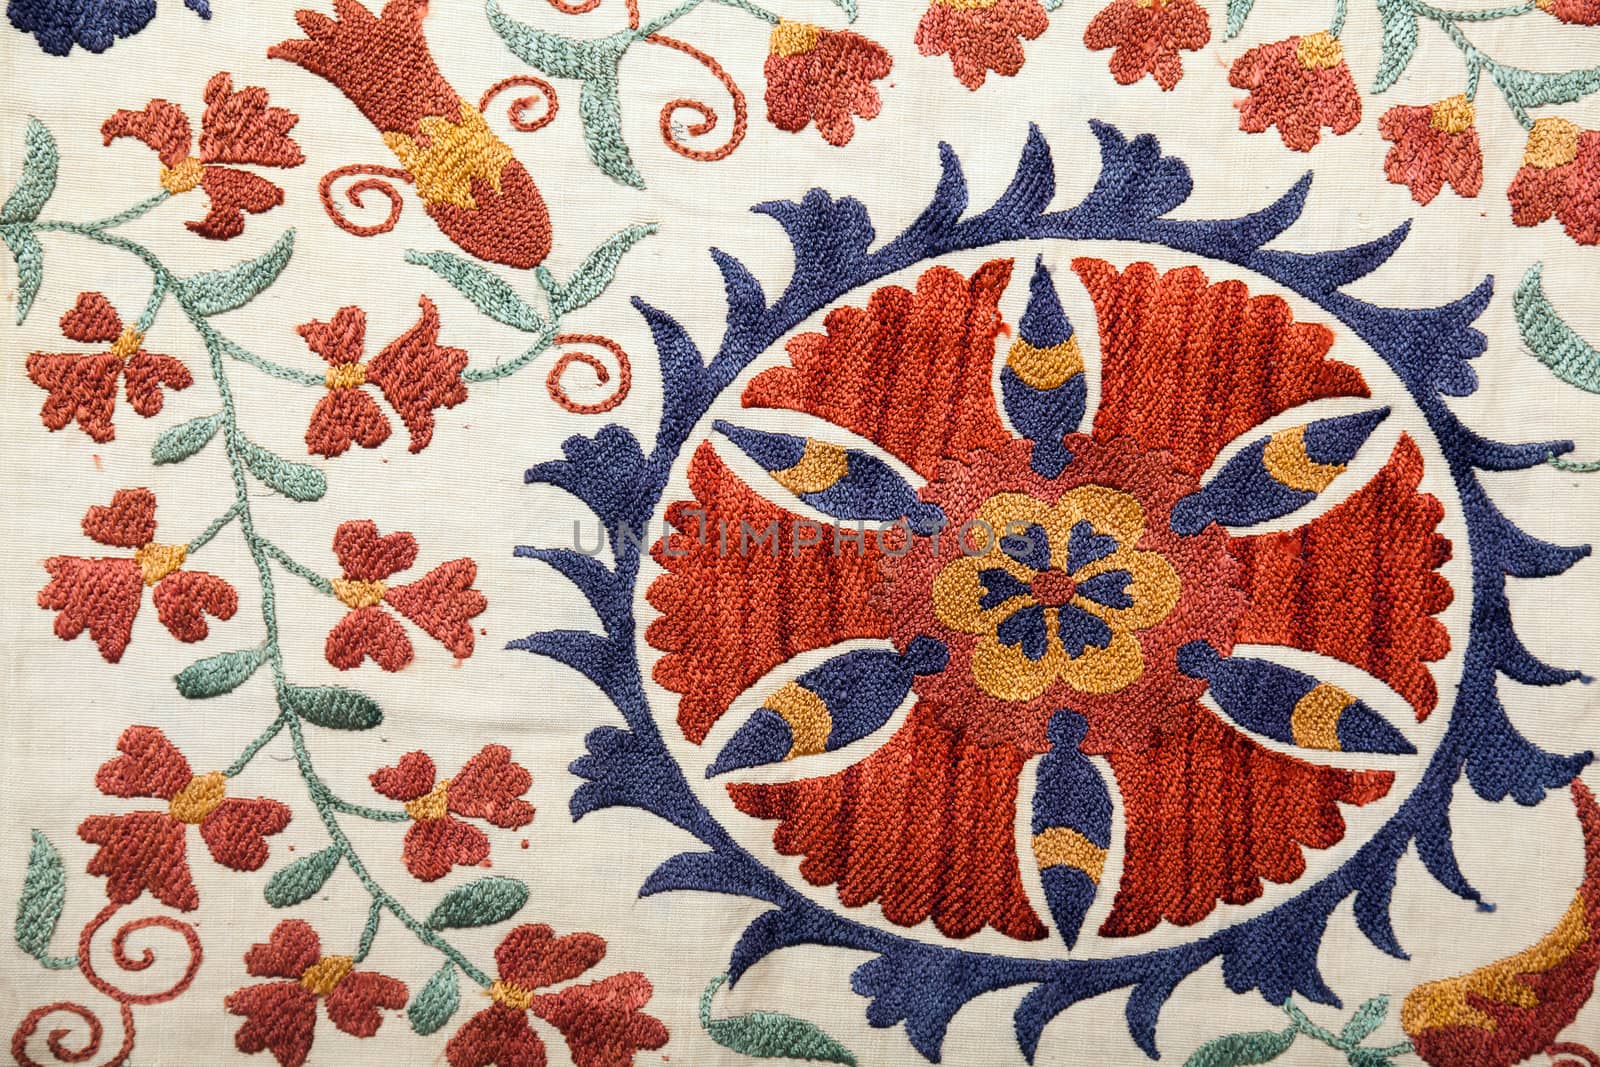 Handmade embroidery by Portokalis